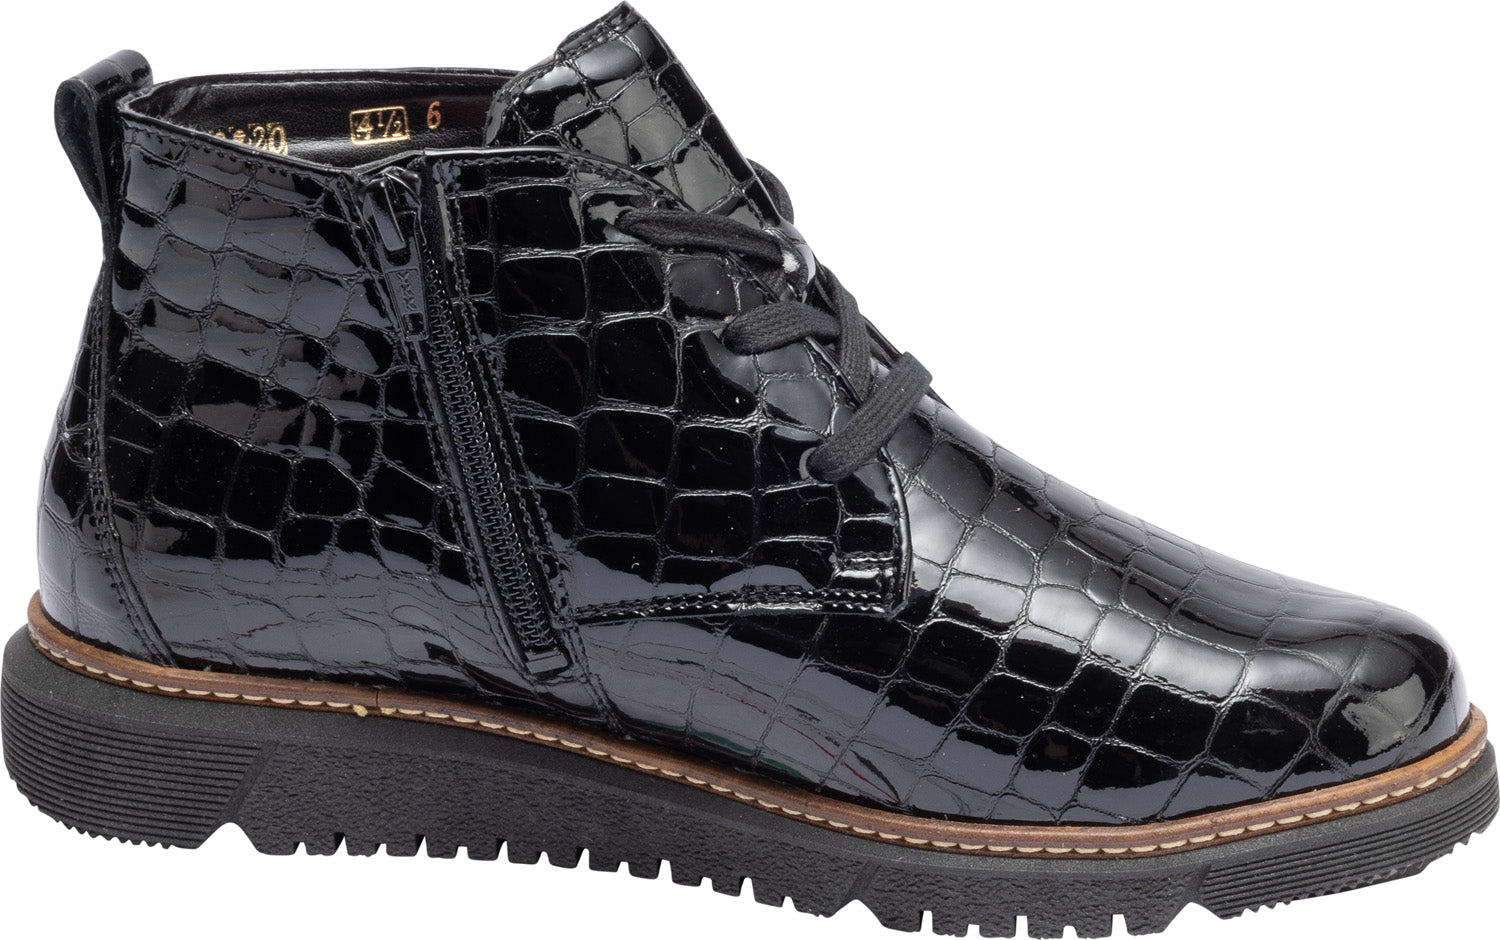 Waldlaufer 604804 150 001 K-Gesa Ladies Black Patent Leather Zip & Lace Ankle Boots